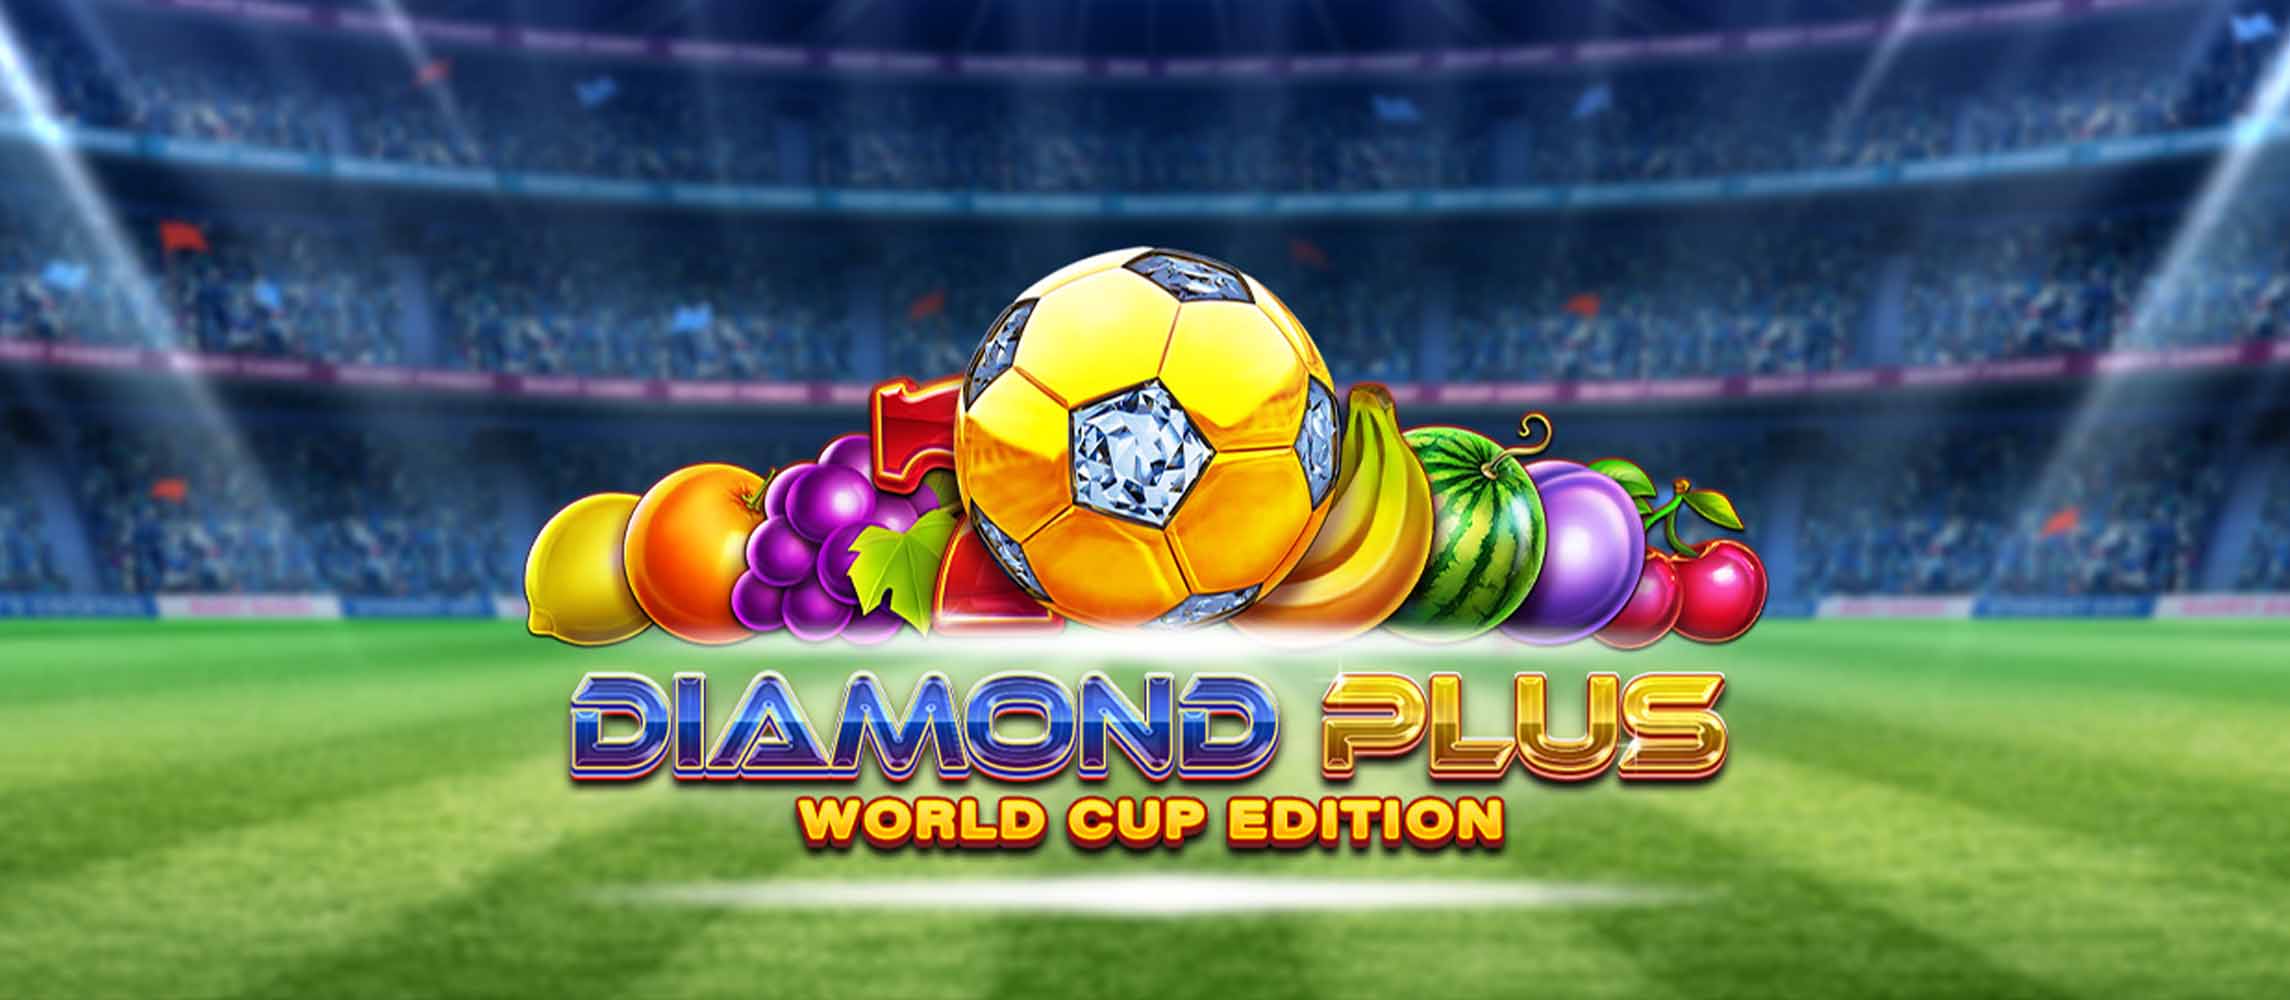 Diamond Plus World Cup Edition by Amusnet